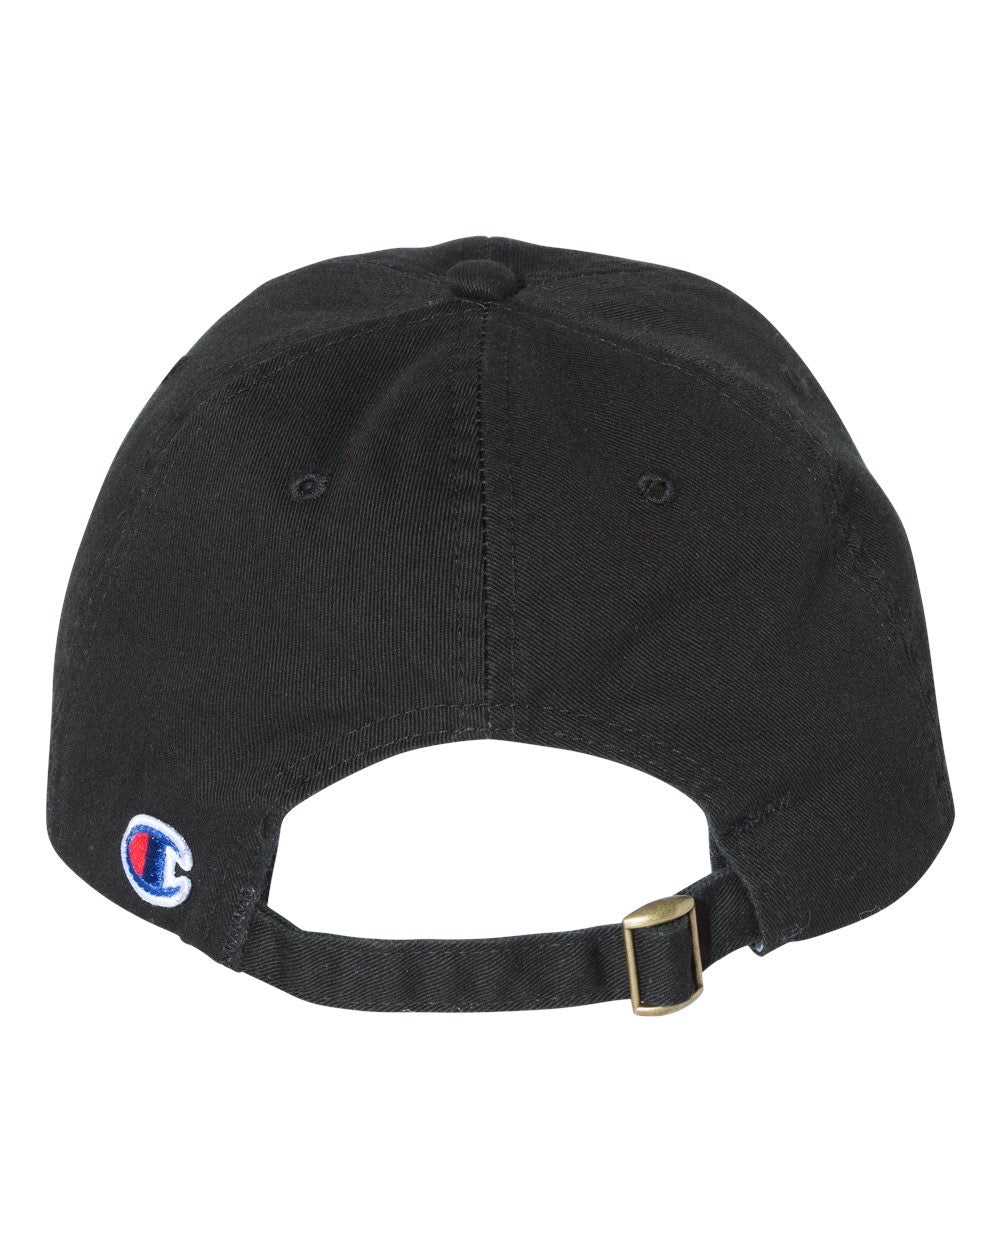 Golden State Warriors 3D Champion Dad Hat- Black - Ten Gallon Hat Co.